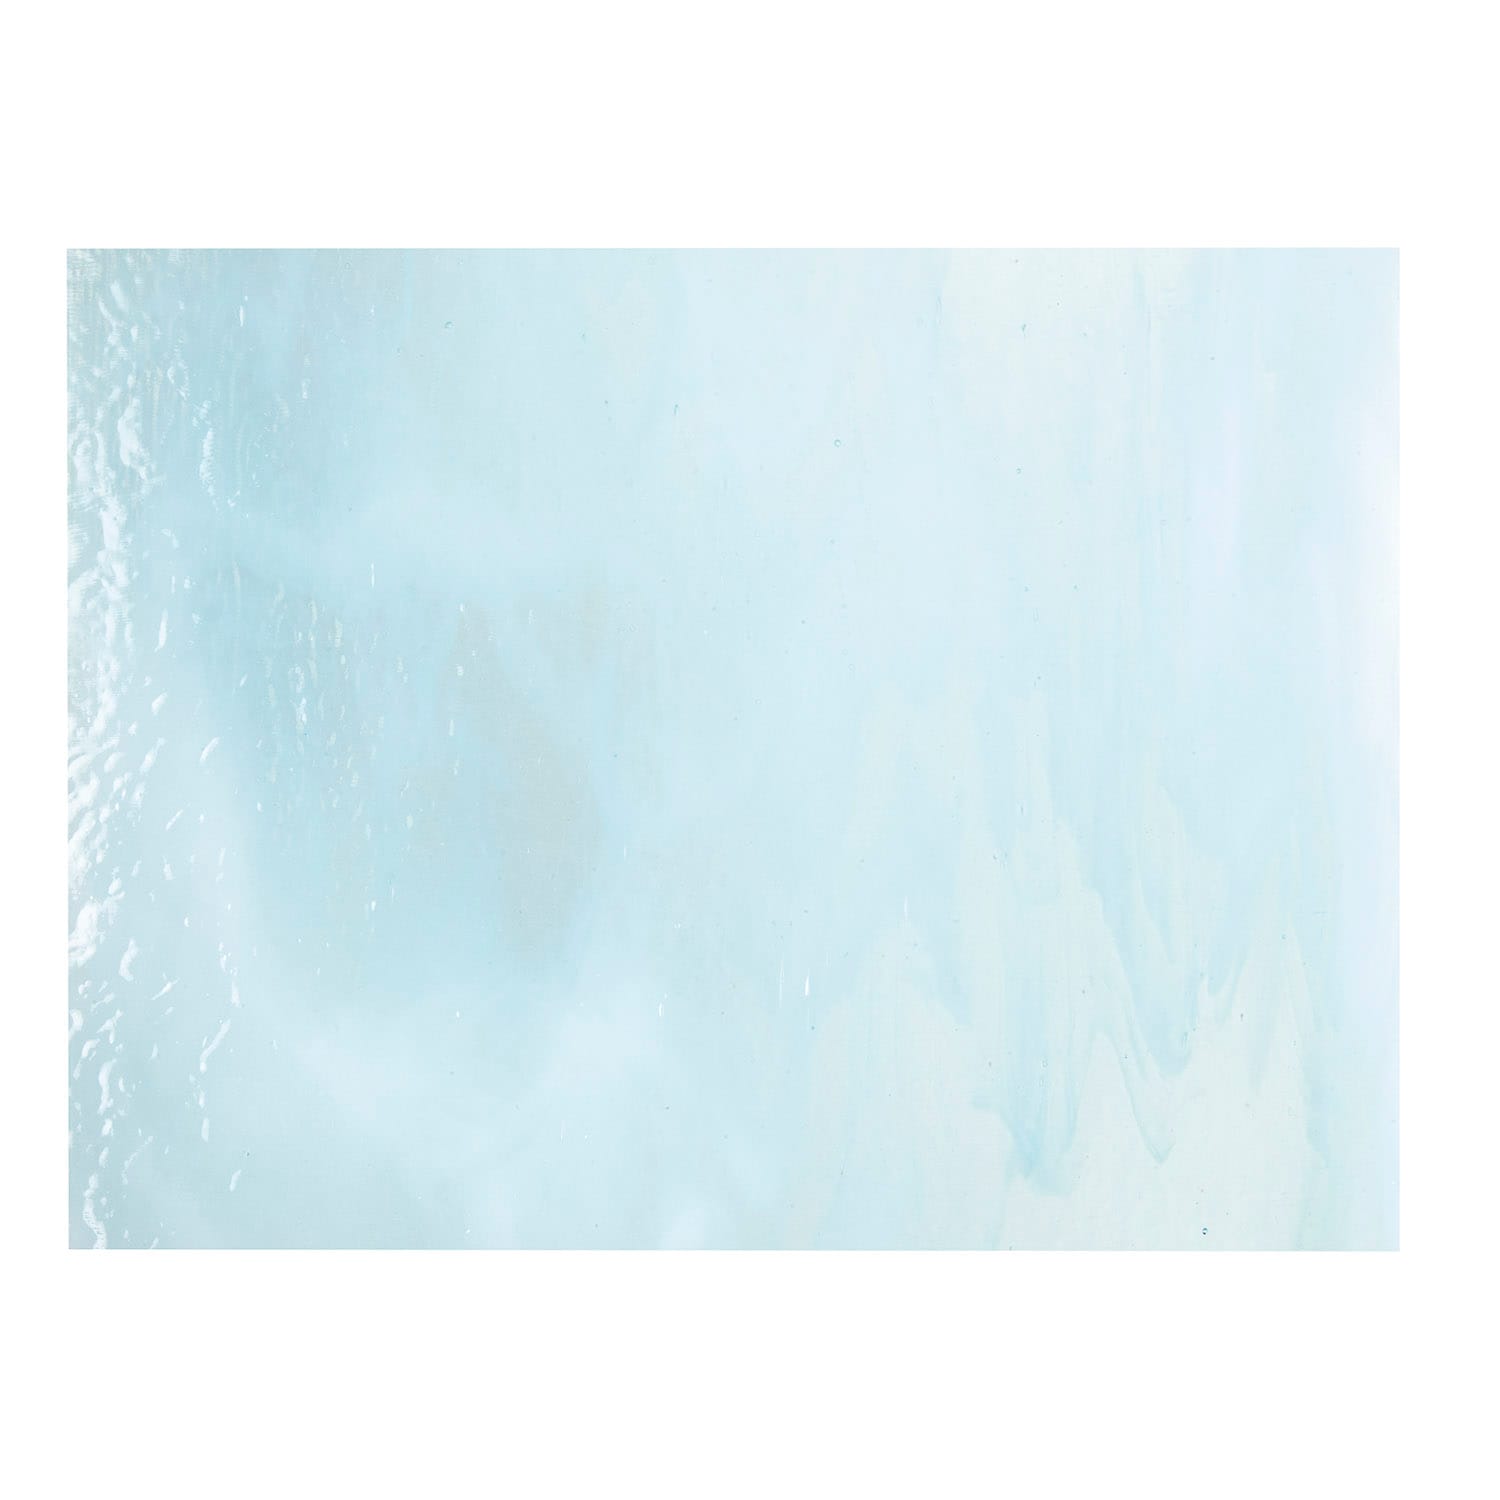 Bullseye COE90 Fusing Glass 002218 Aqua Blue Tint, White Handy Sheet